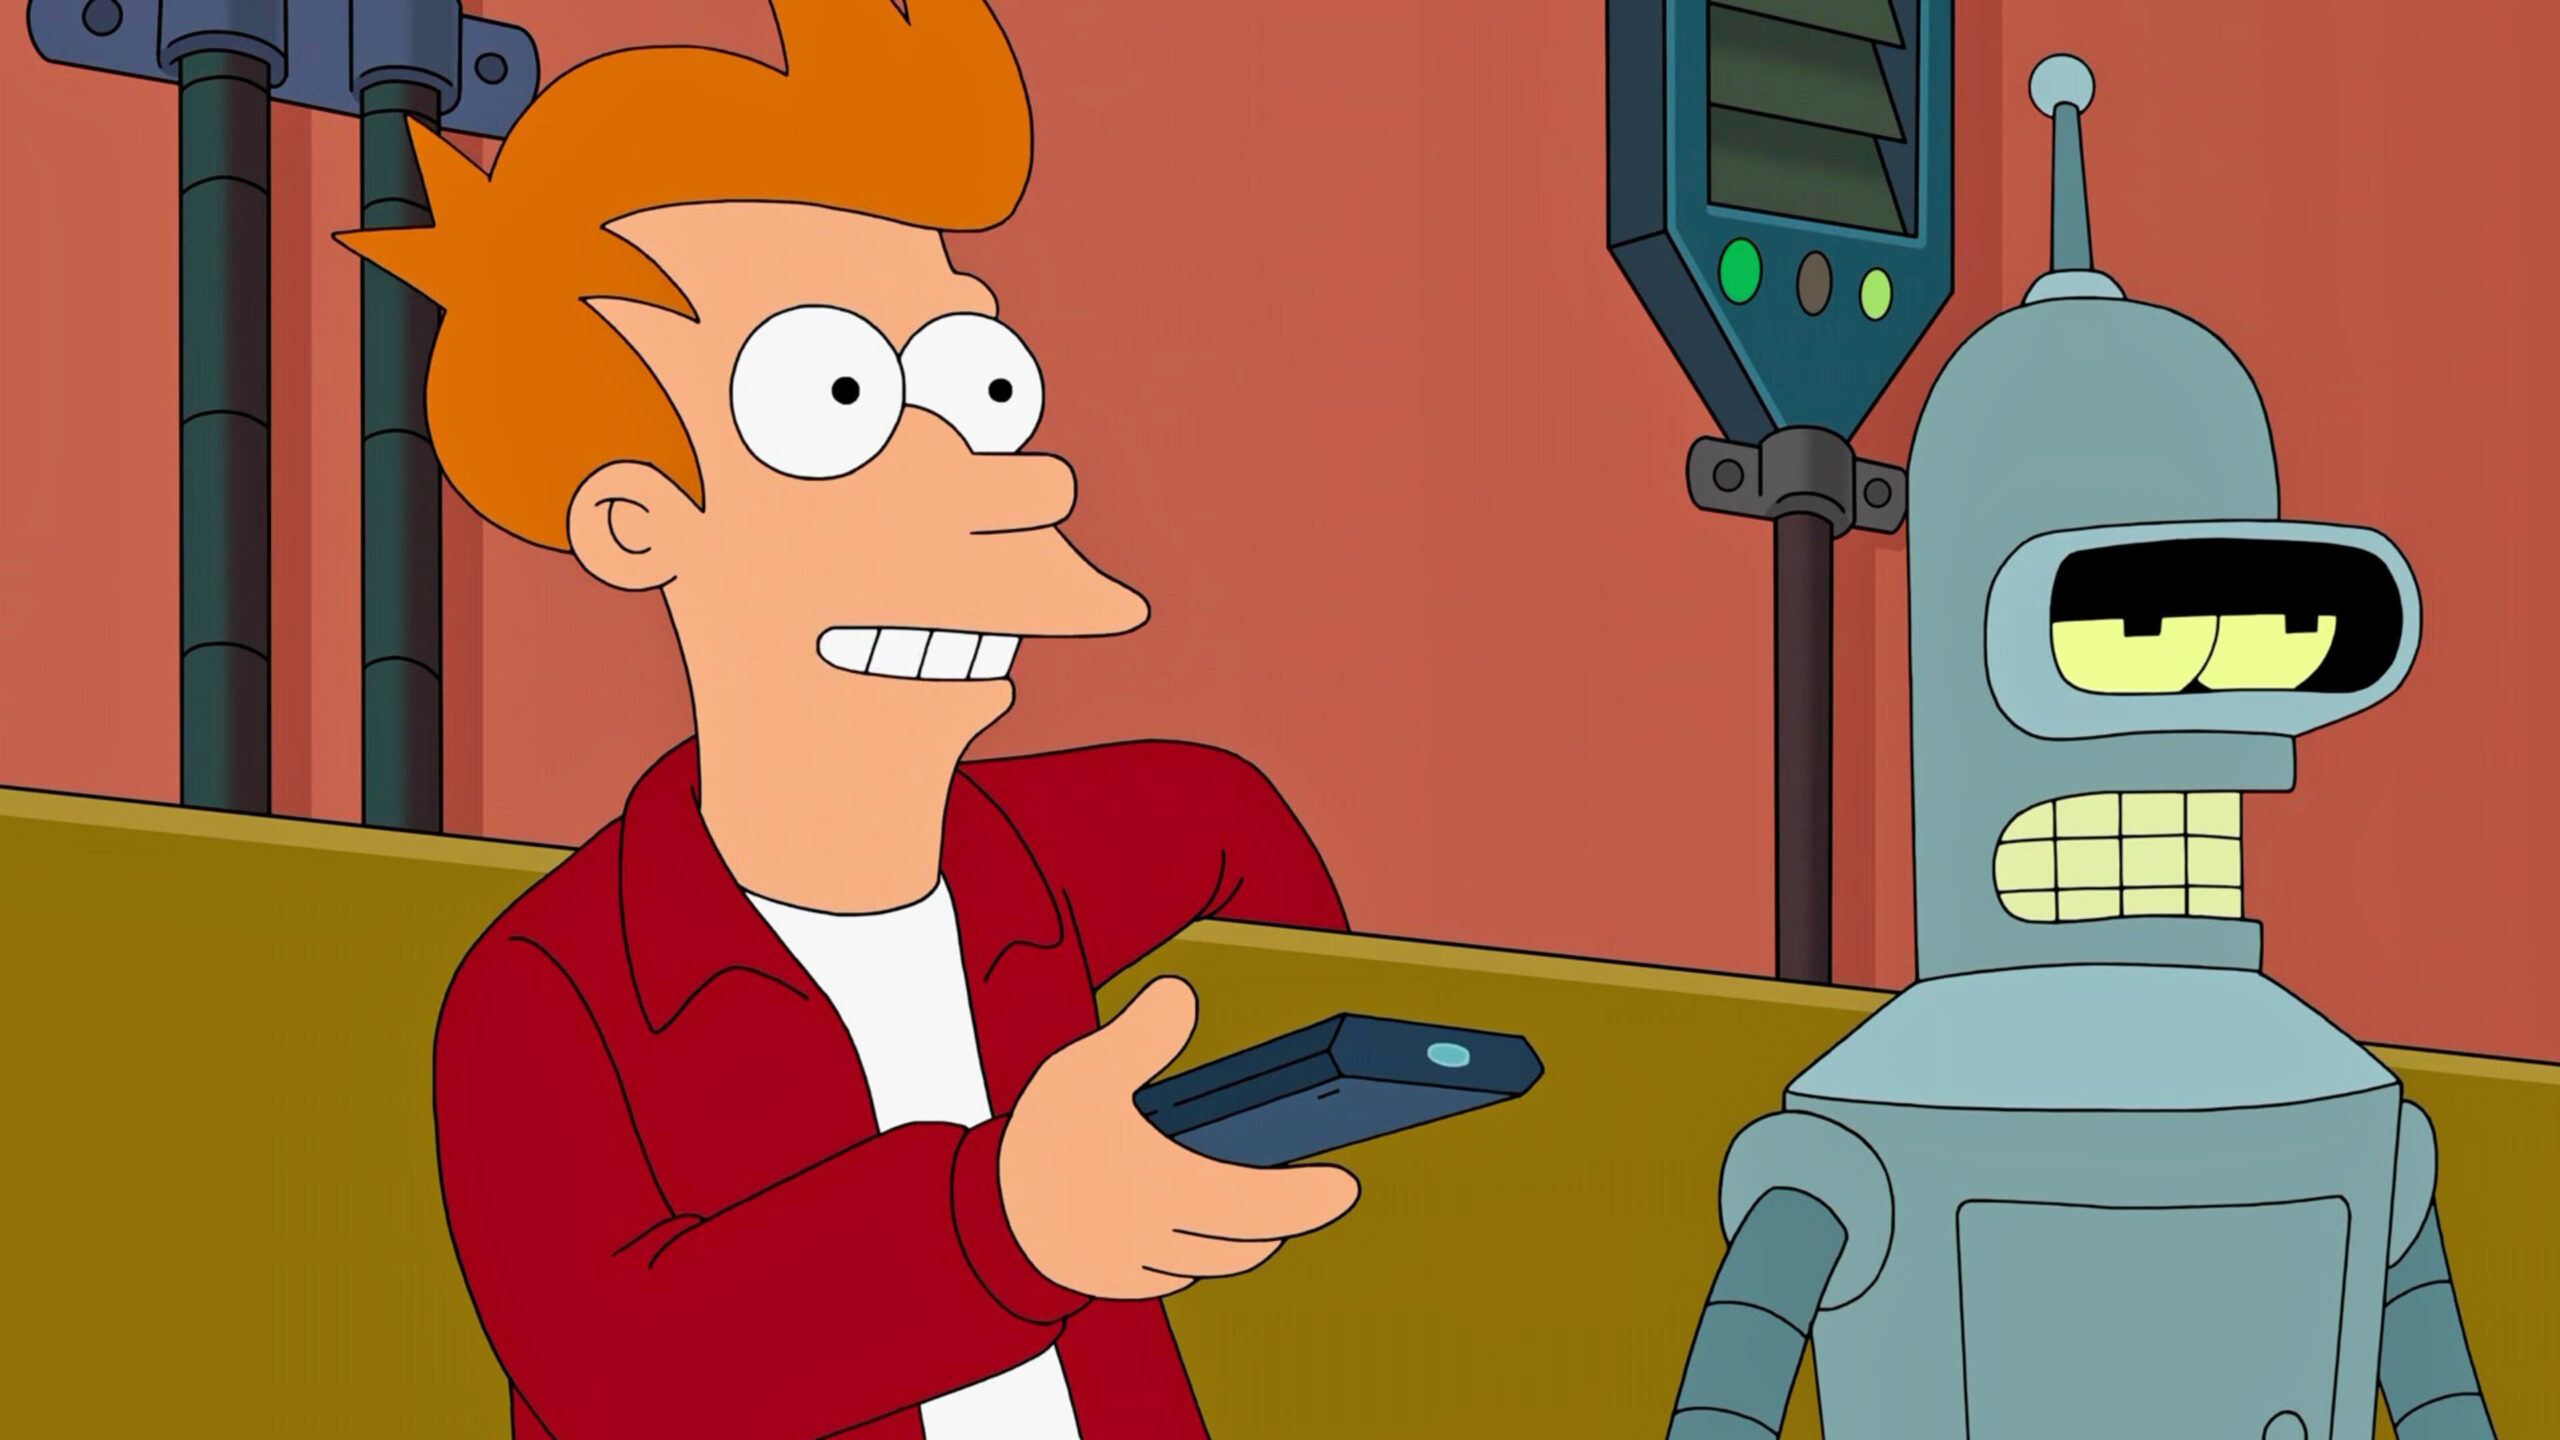 Fry e Bender in Futurama 11